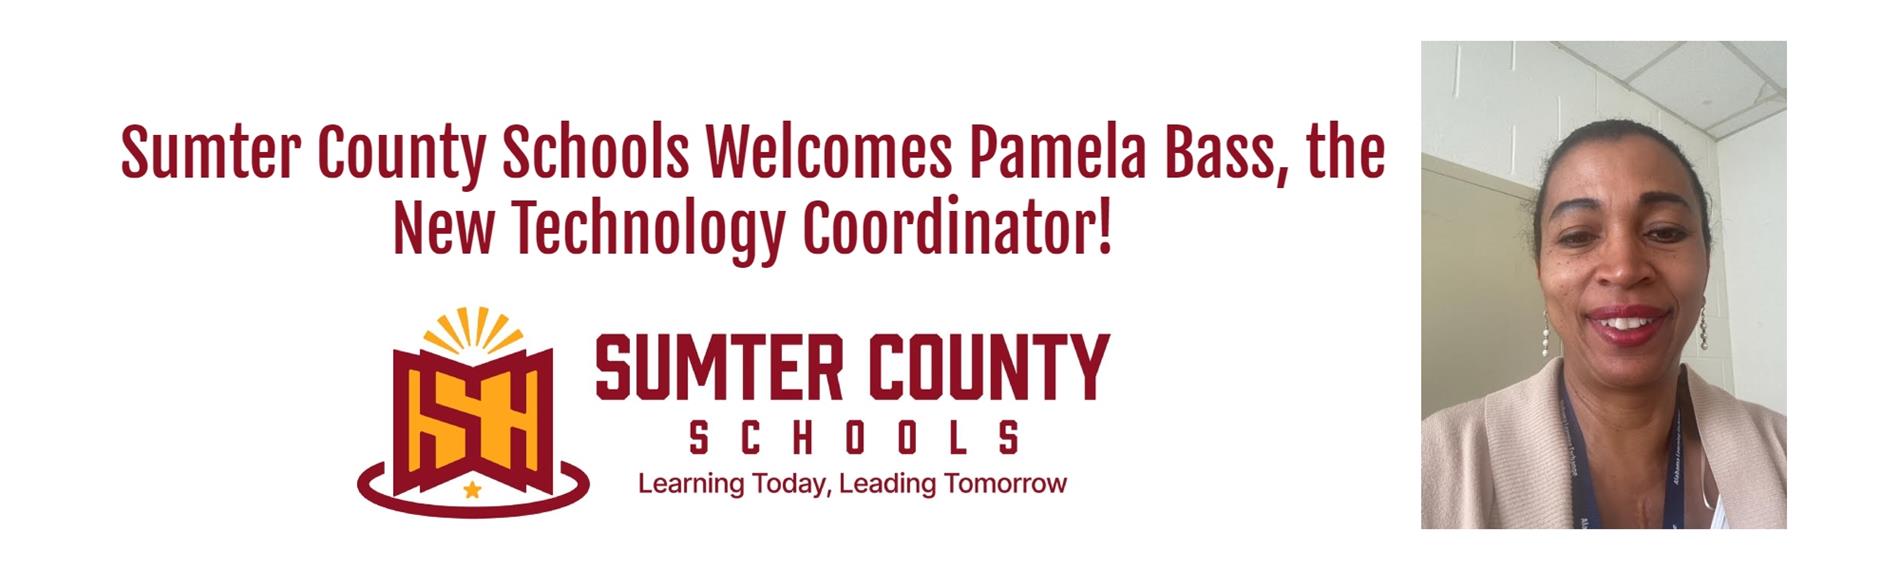 Sumter County Schools Welcomes Pamela Bass, the New Technology Coordinator